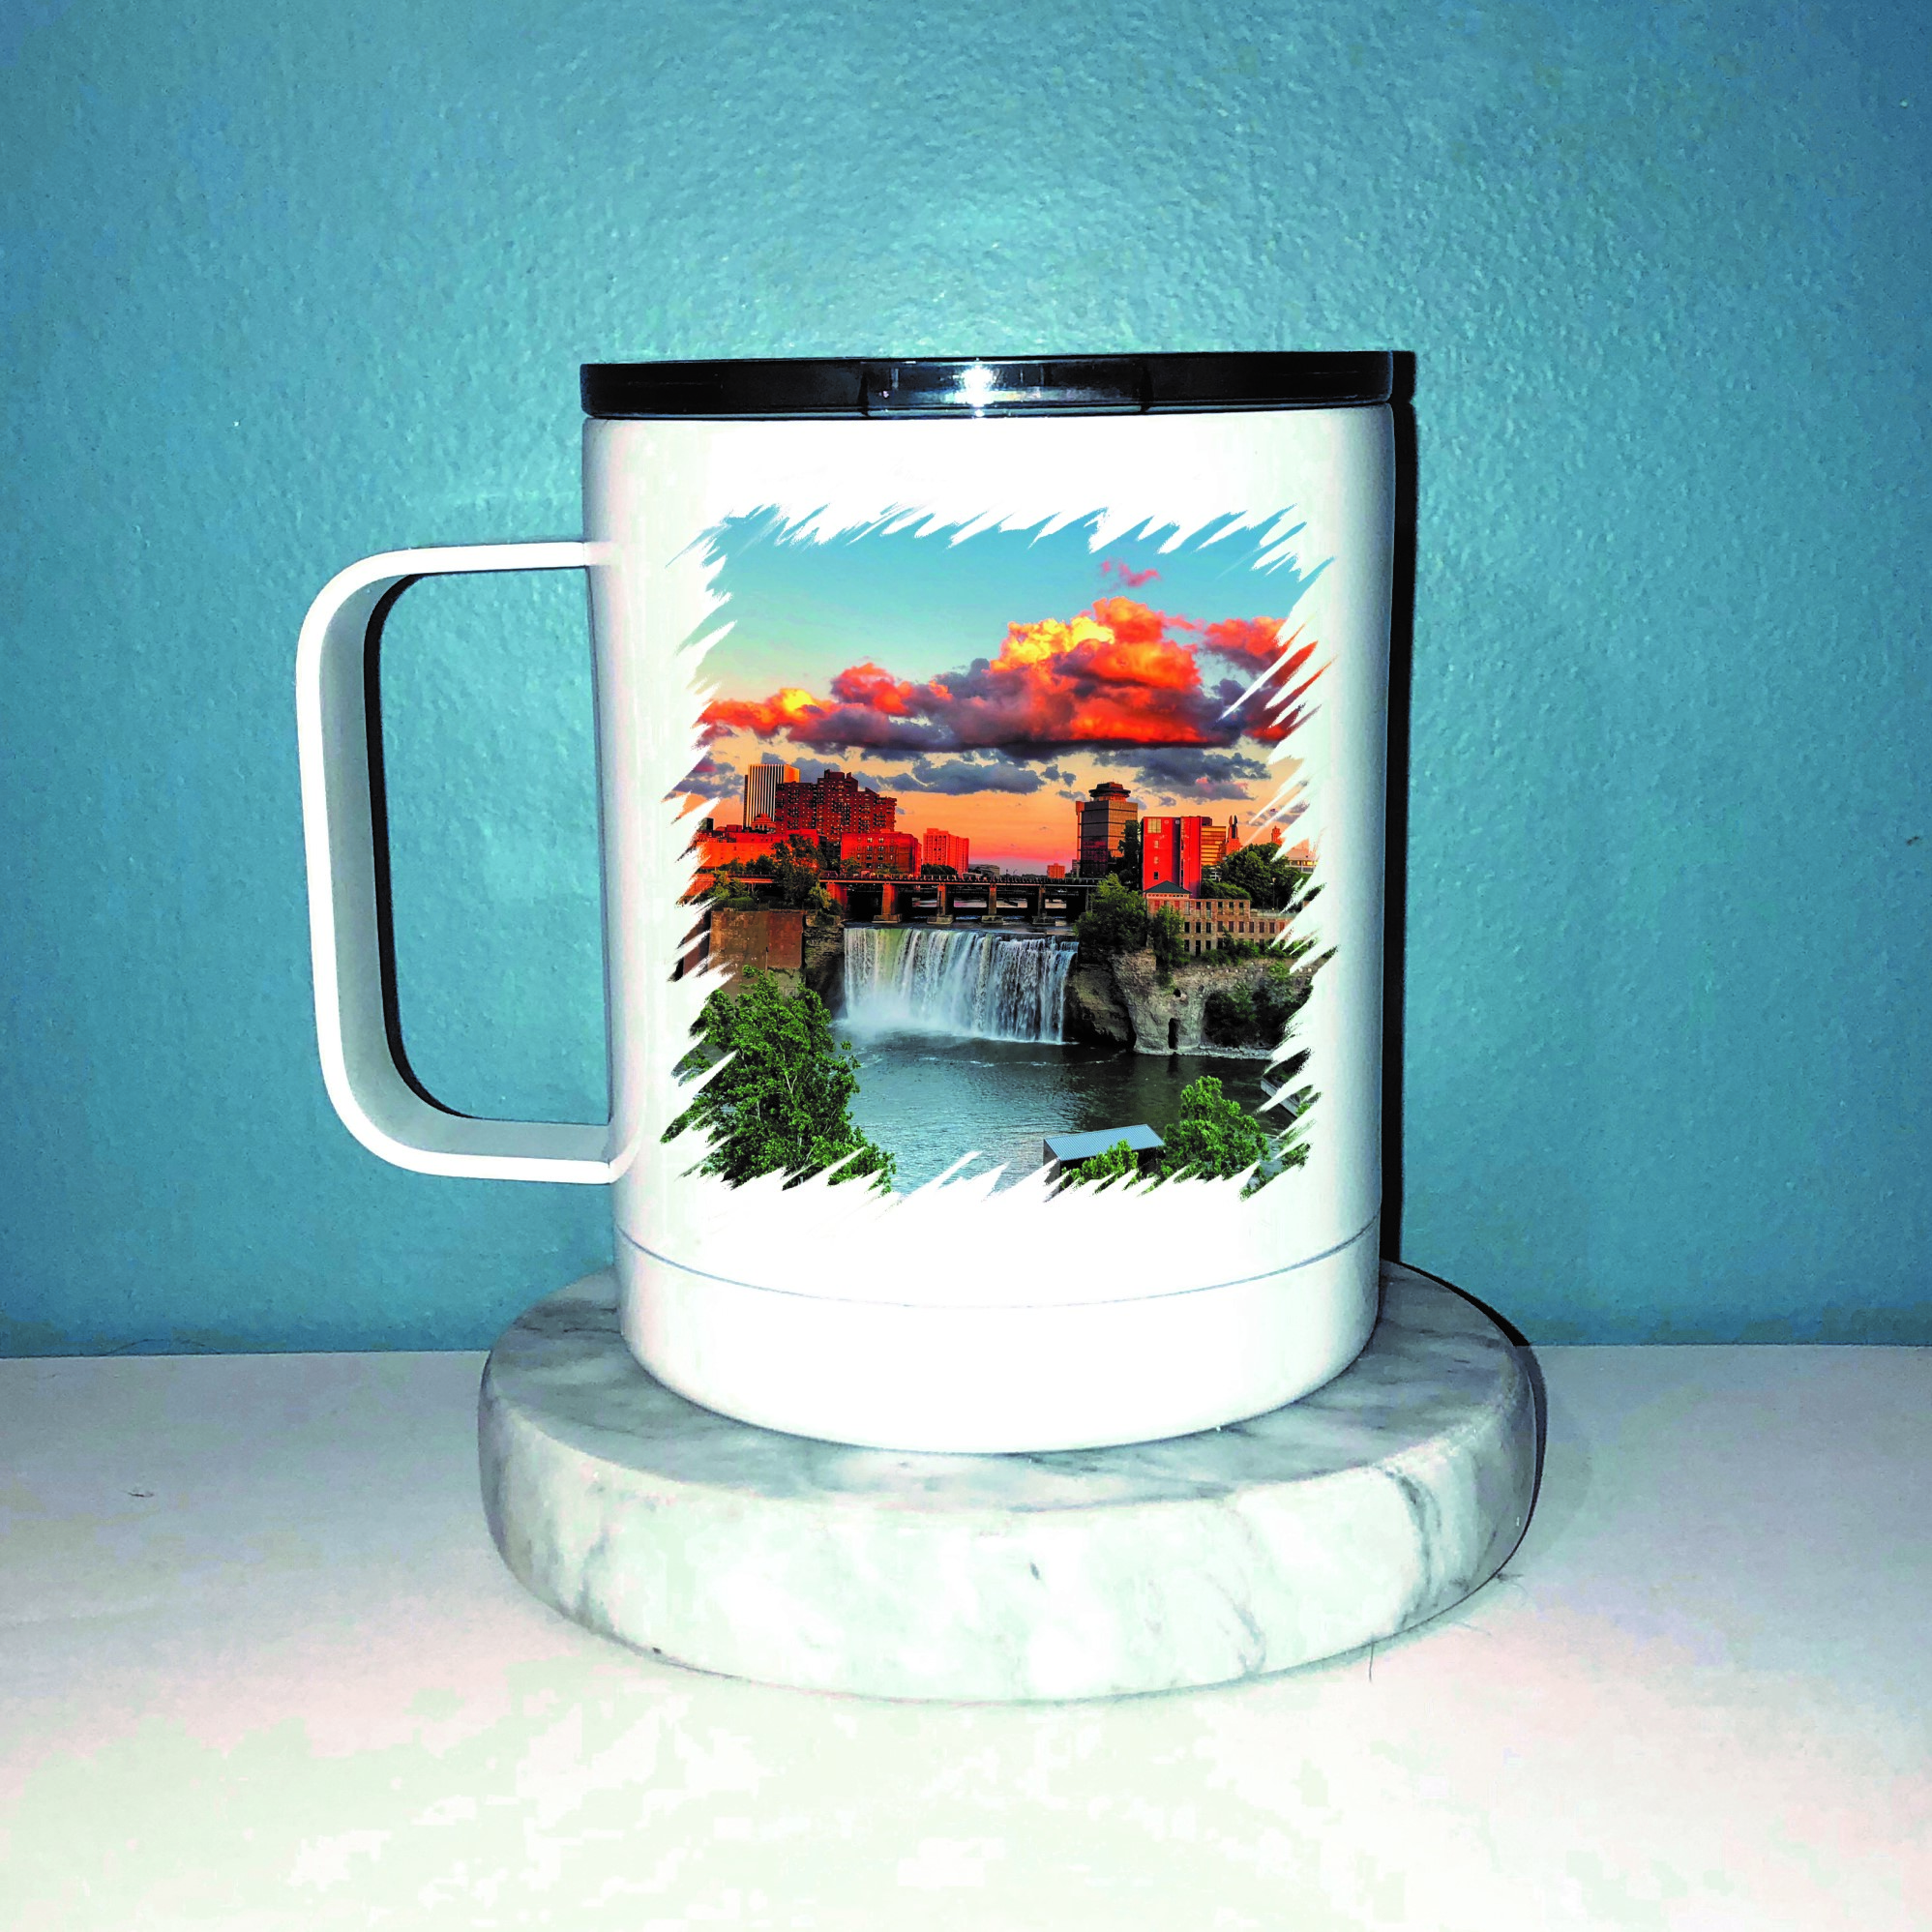 High Falls photo mug.